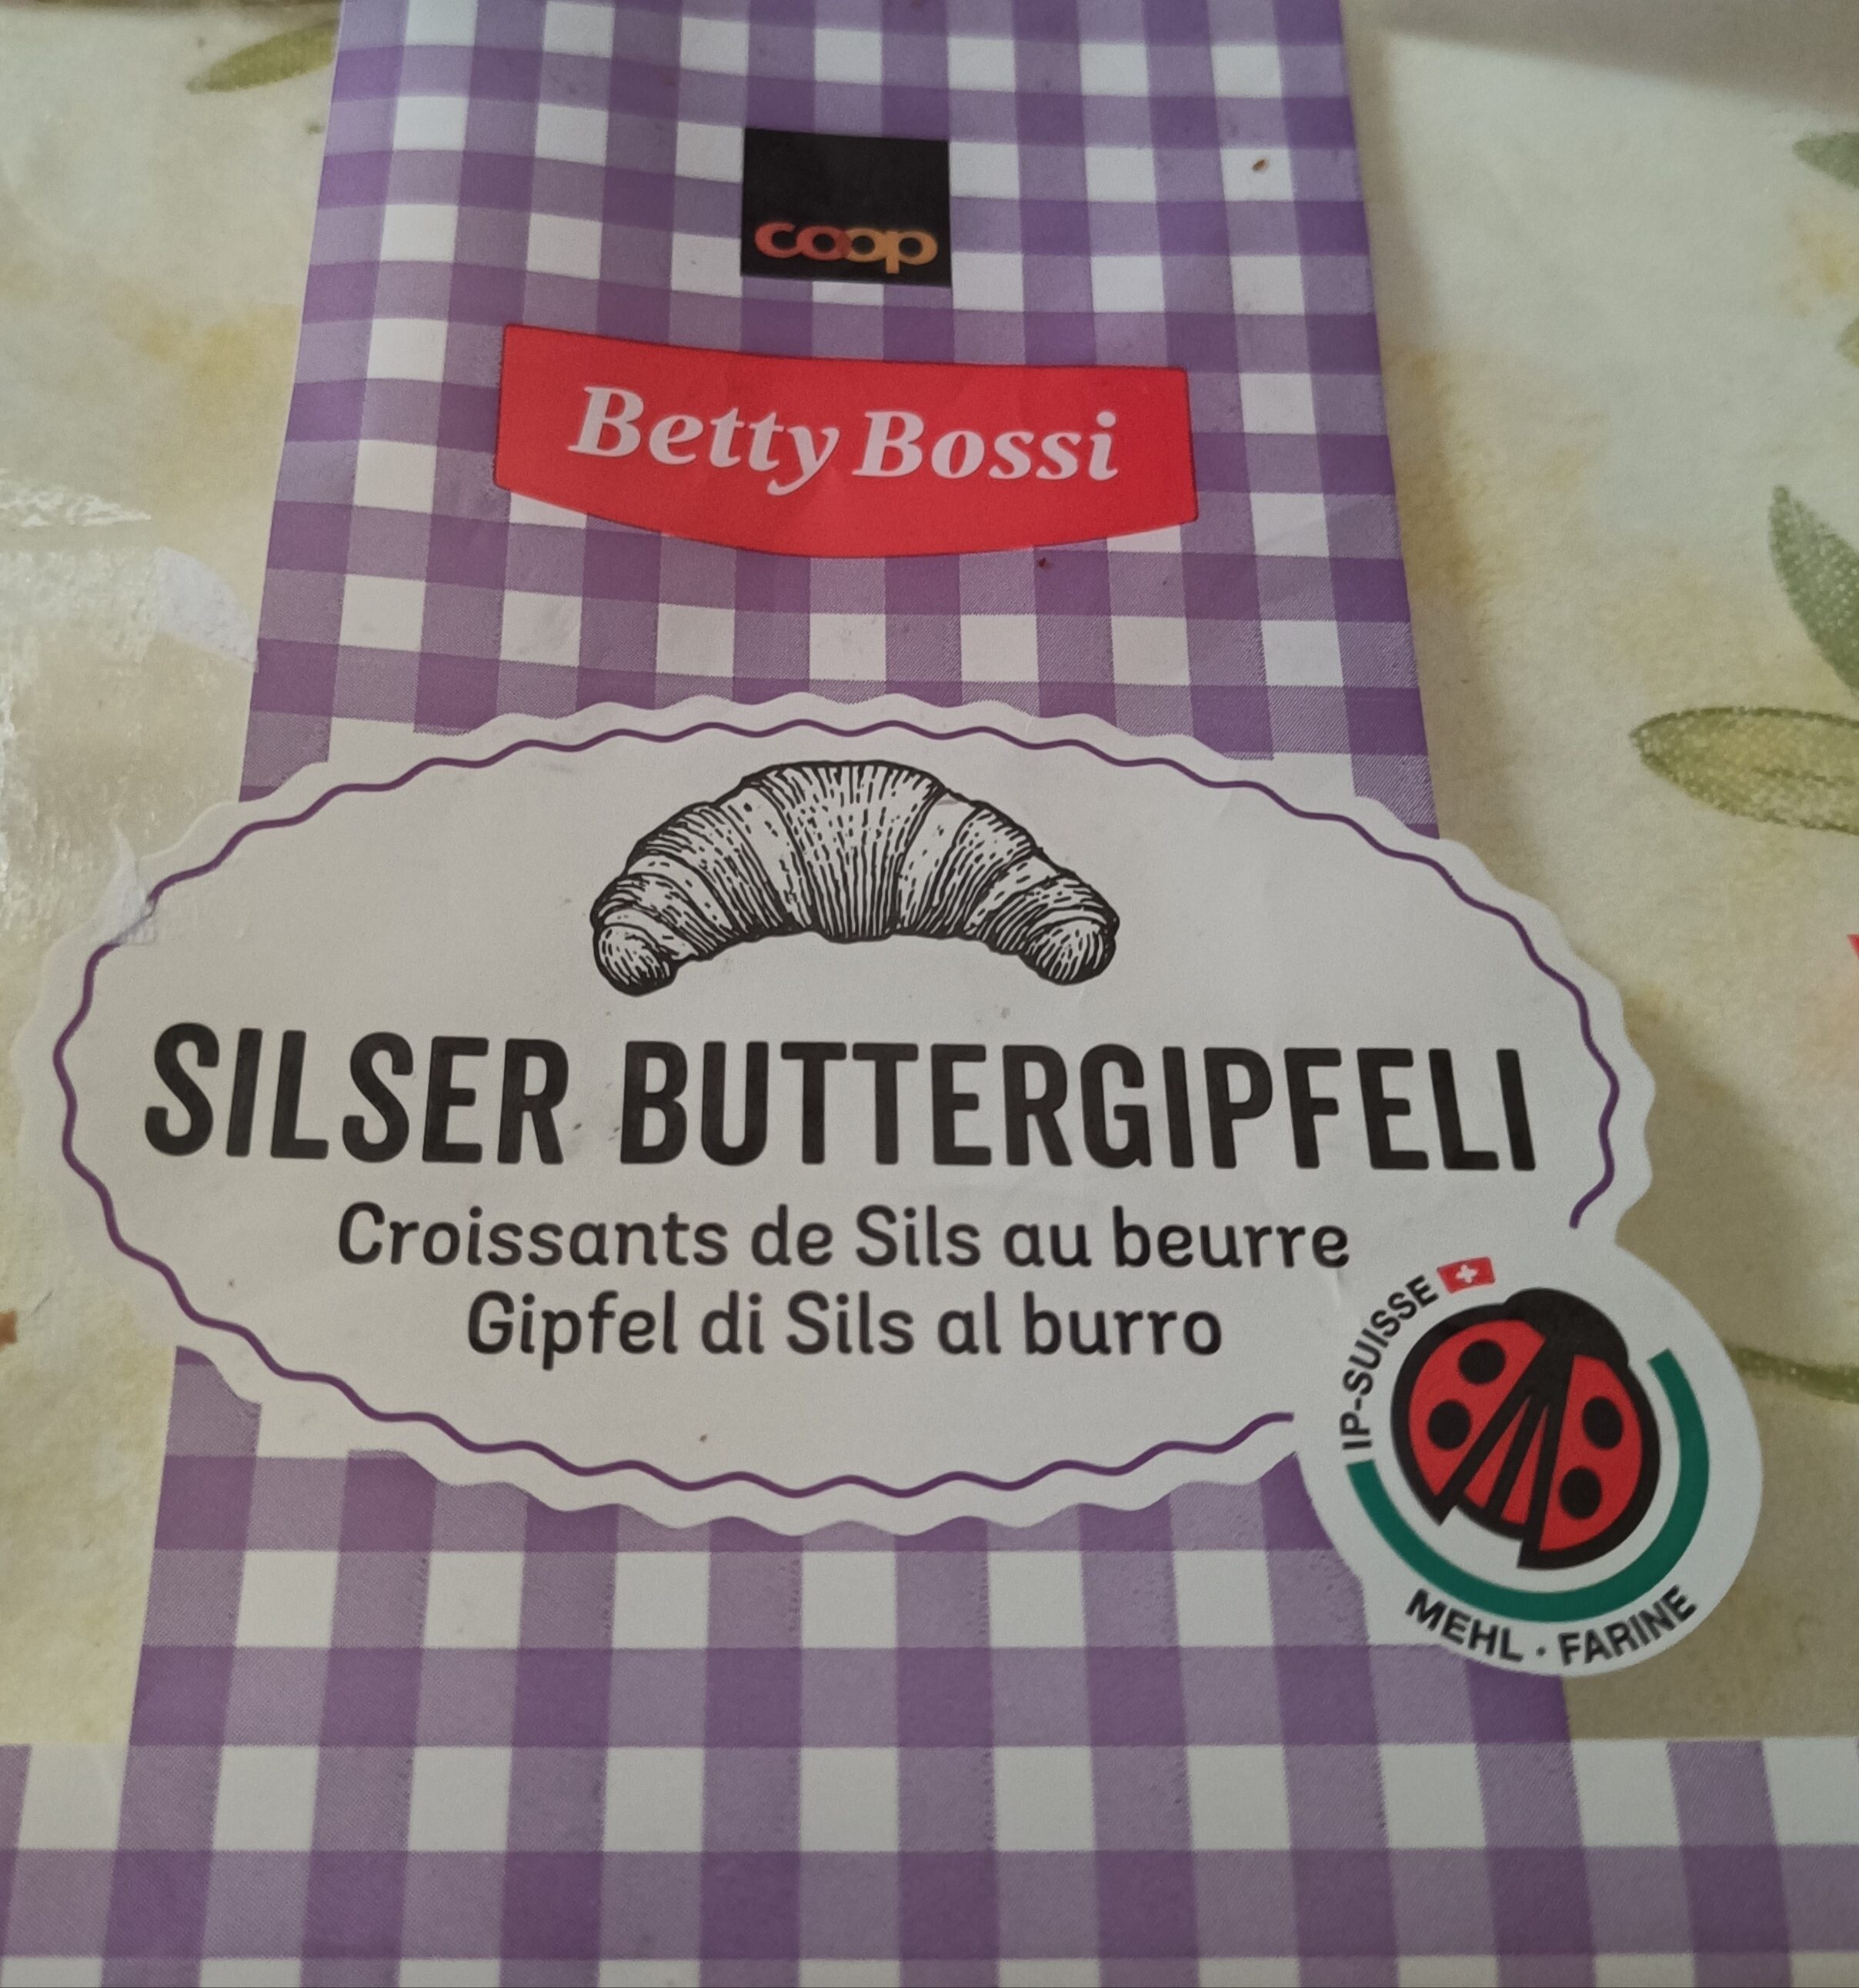 Silser buttergipfeli - Prodotto - fr